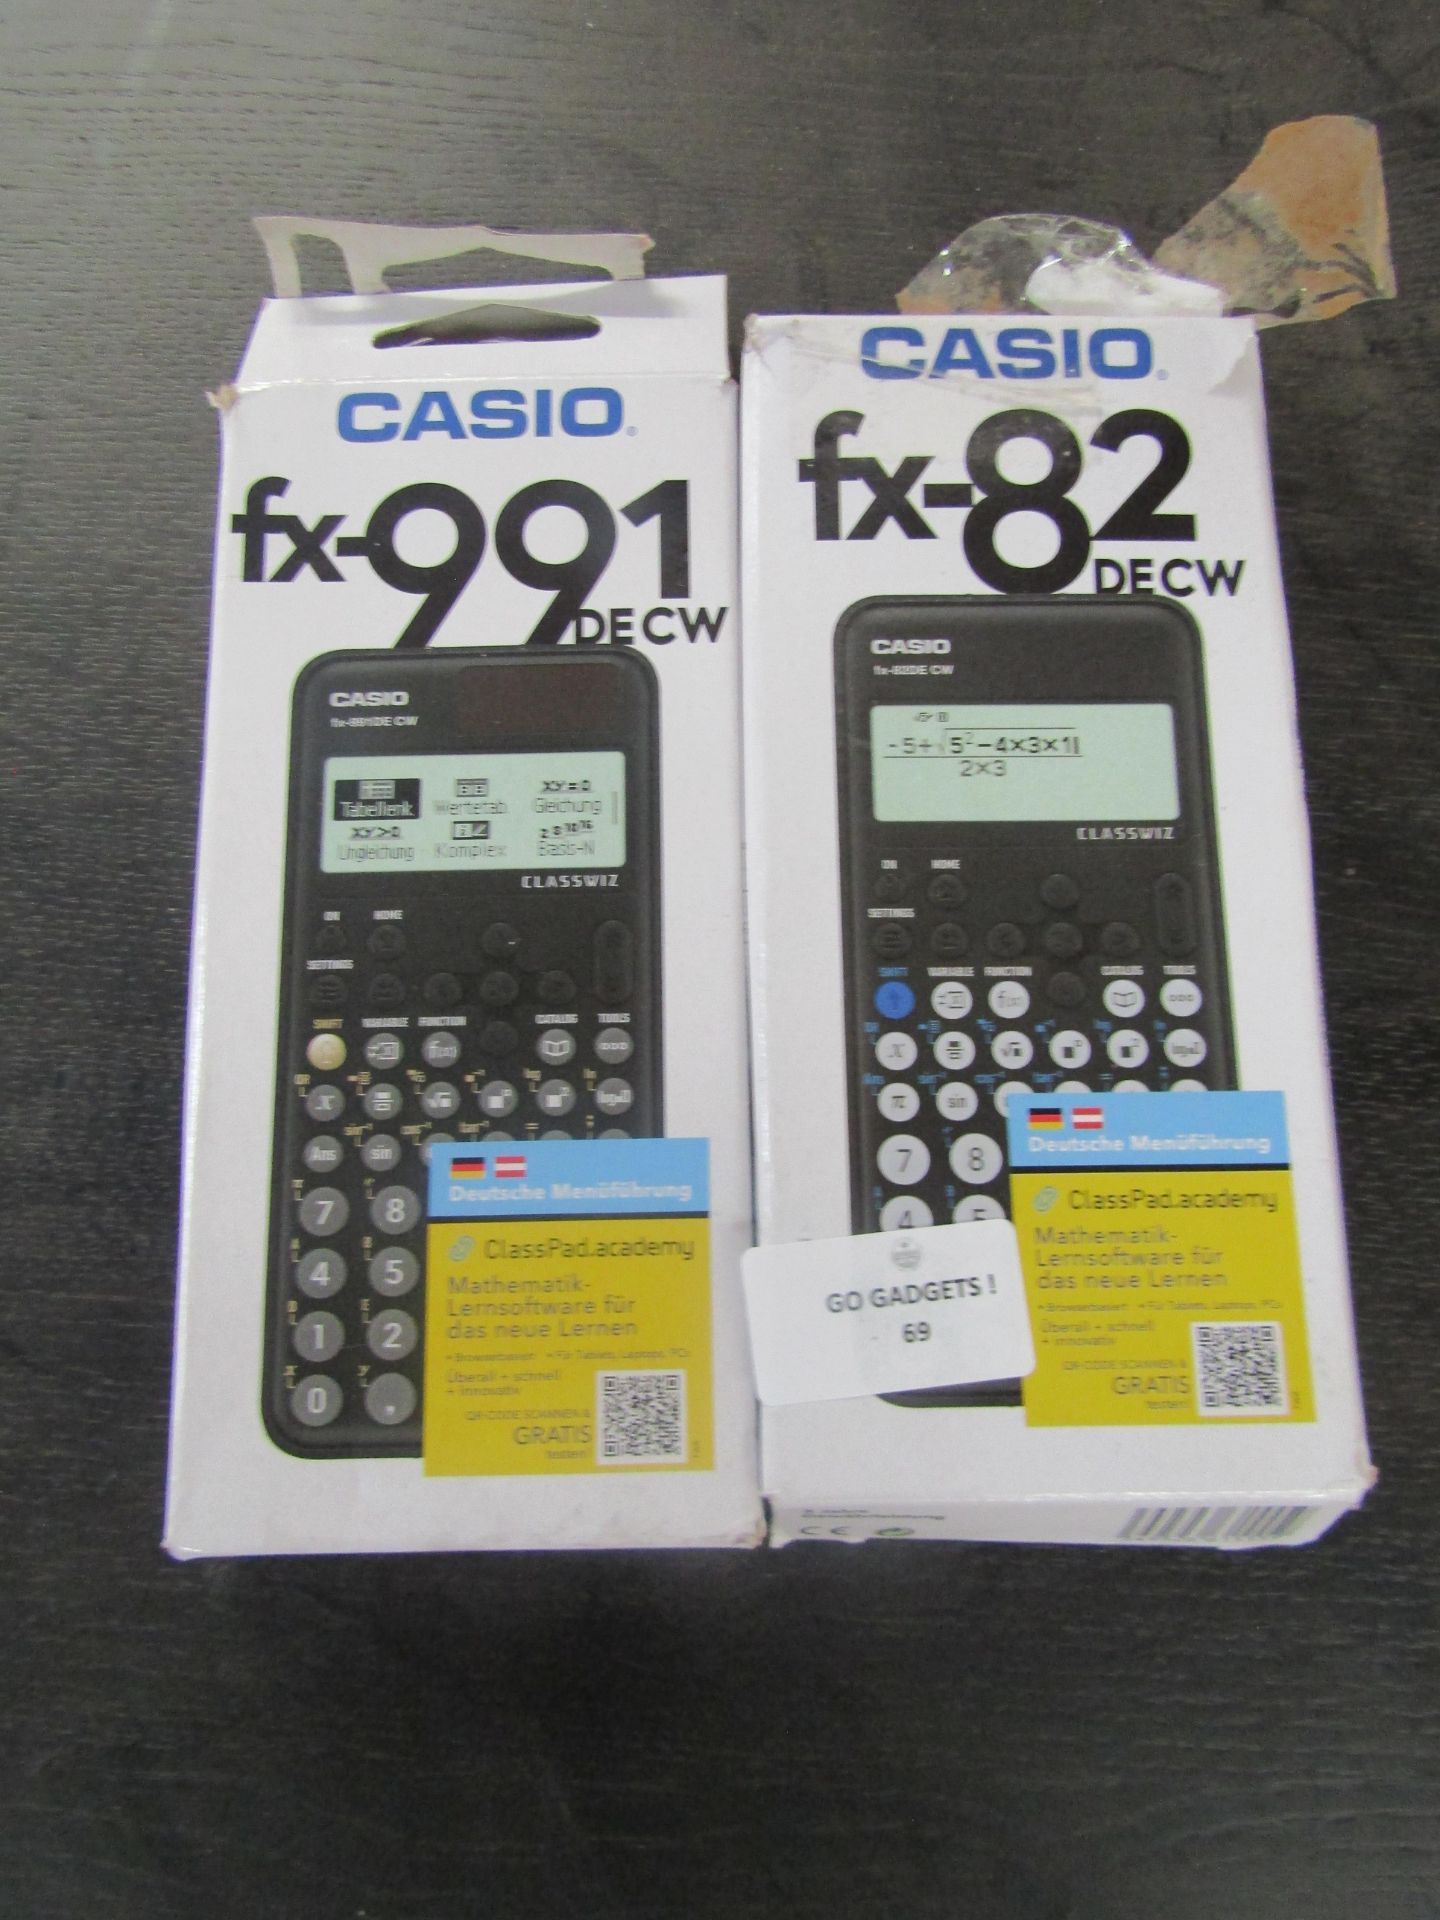 Casio FX-991DECW ClassWiz Technical Scientific Calculator, German version - Both Unchecked &